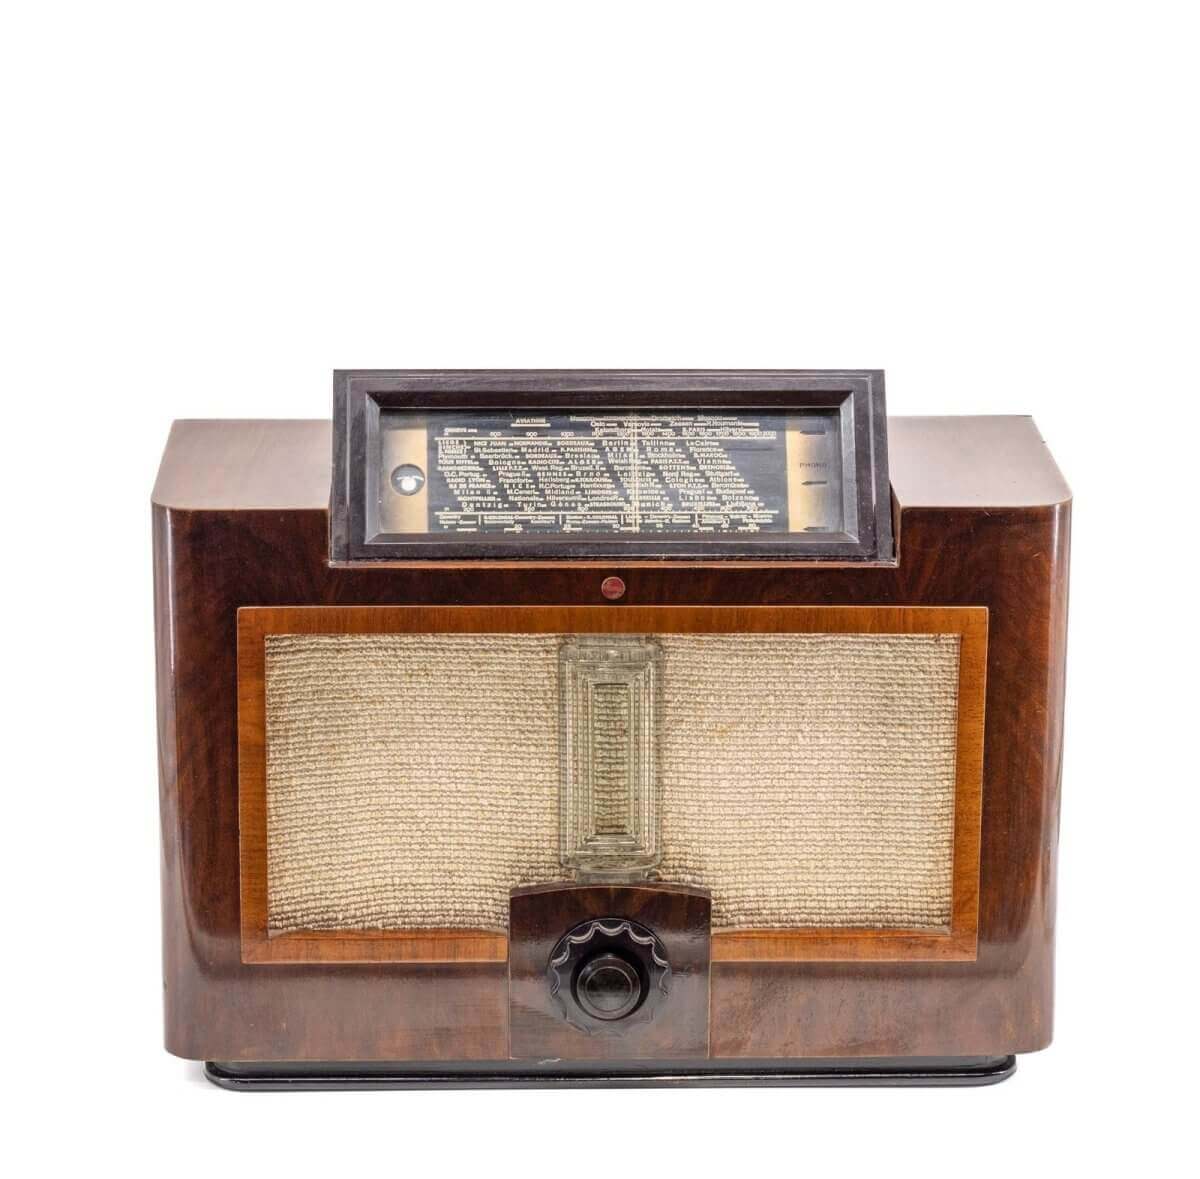 Radio Bluetooth Philips Vintage 40’S enceinte connectée bluetooth haut de gamme prodige radio vintage design